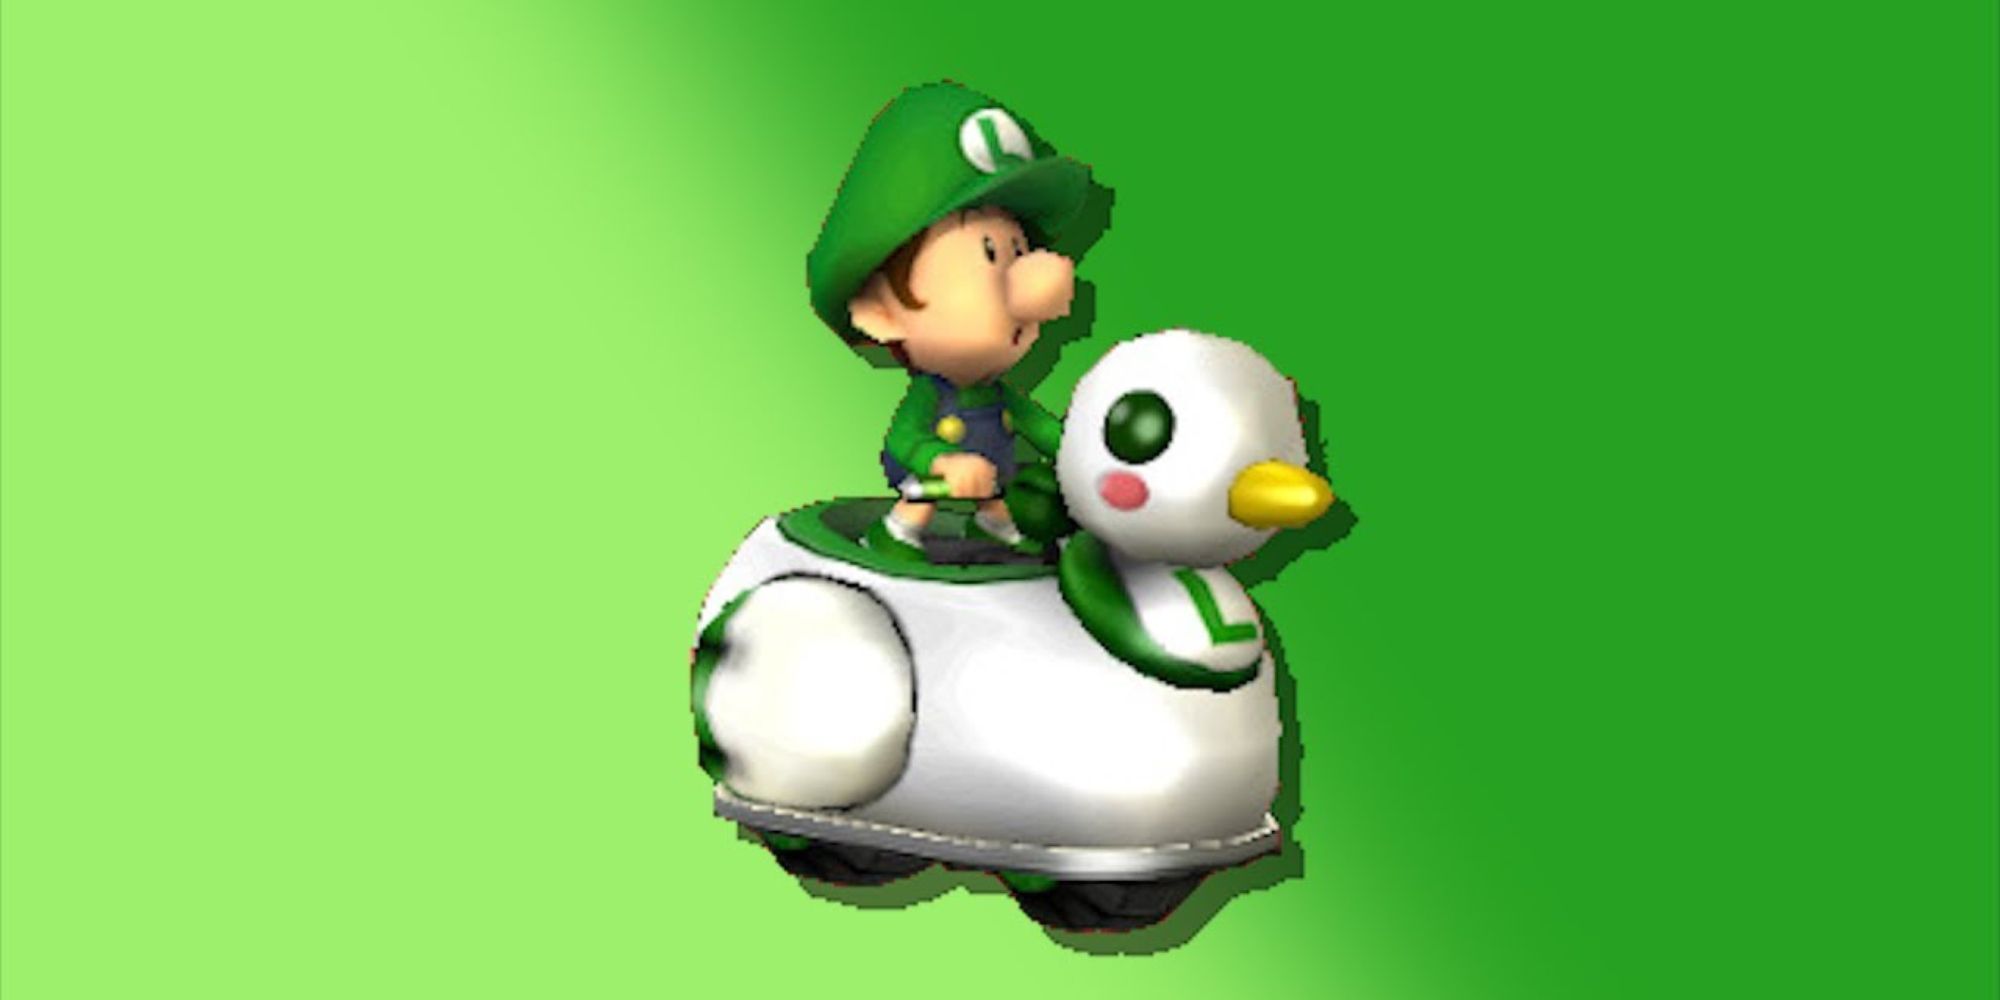 Mario Kart Vehicle Designs Baby Luigi on the Quacker bike against a gradient green backdrop